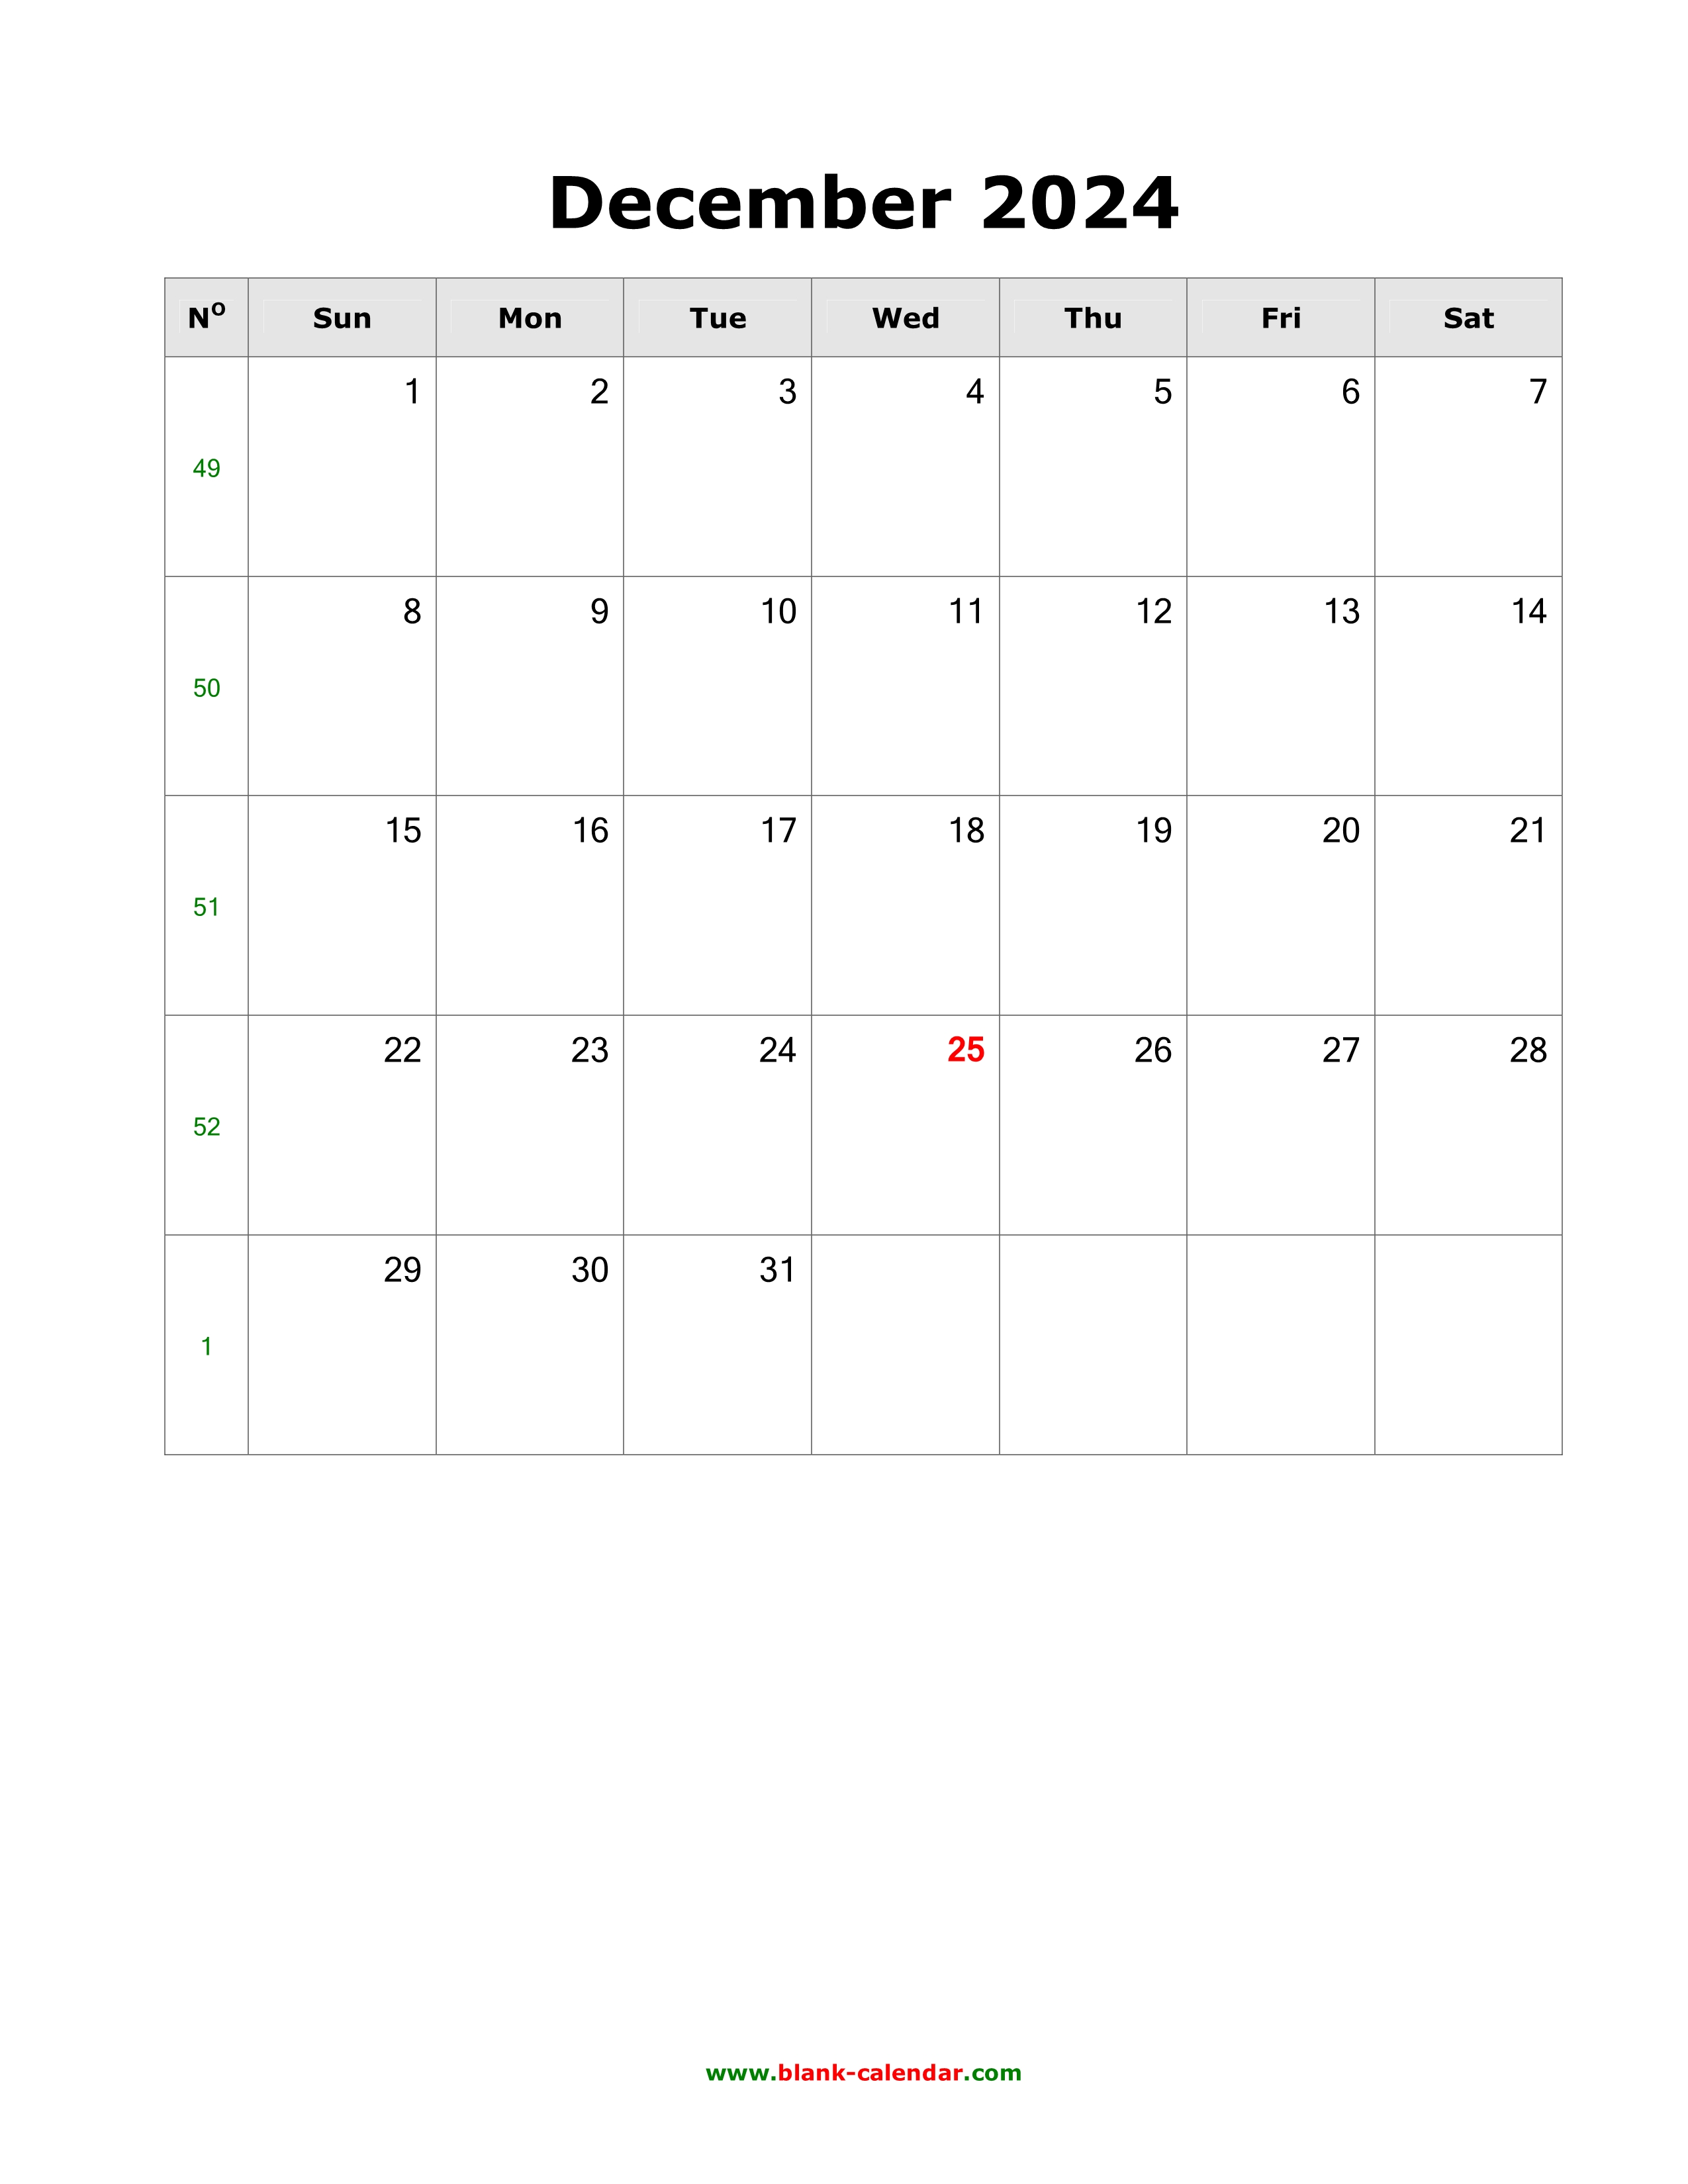 download-december-2024-blank-calendar-vertical